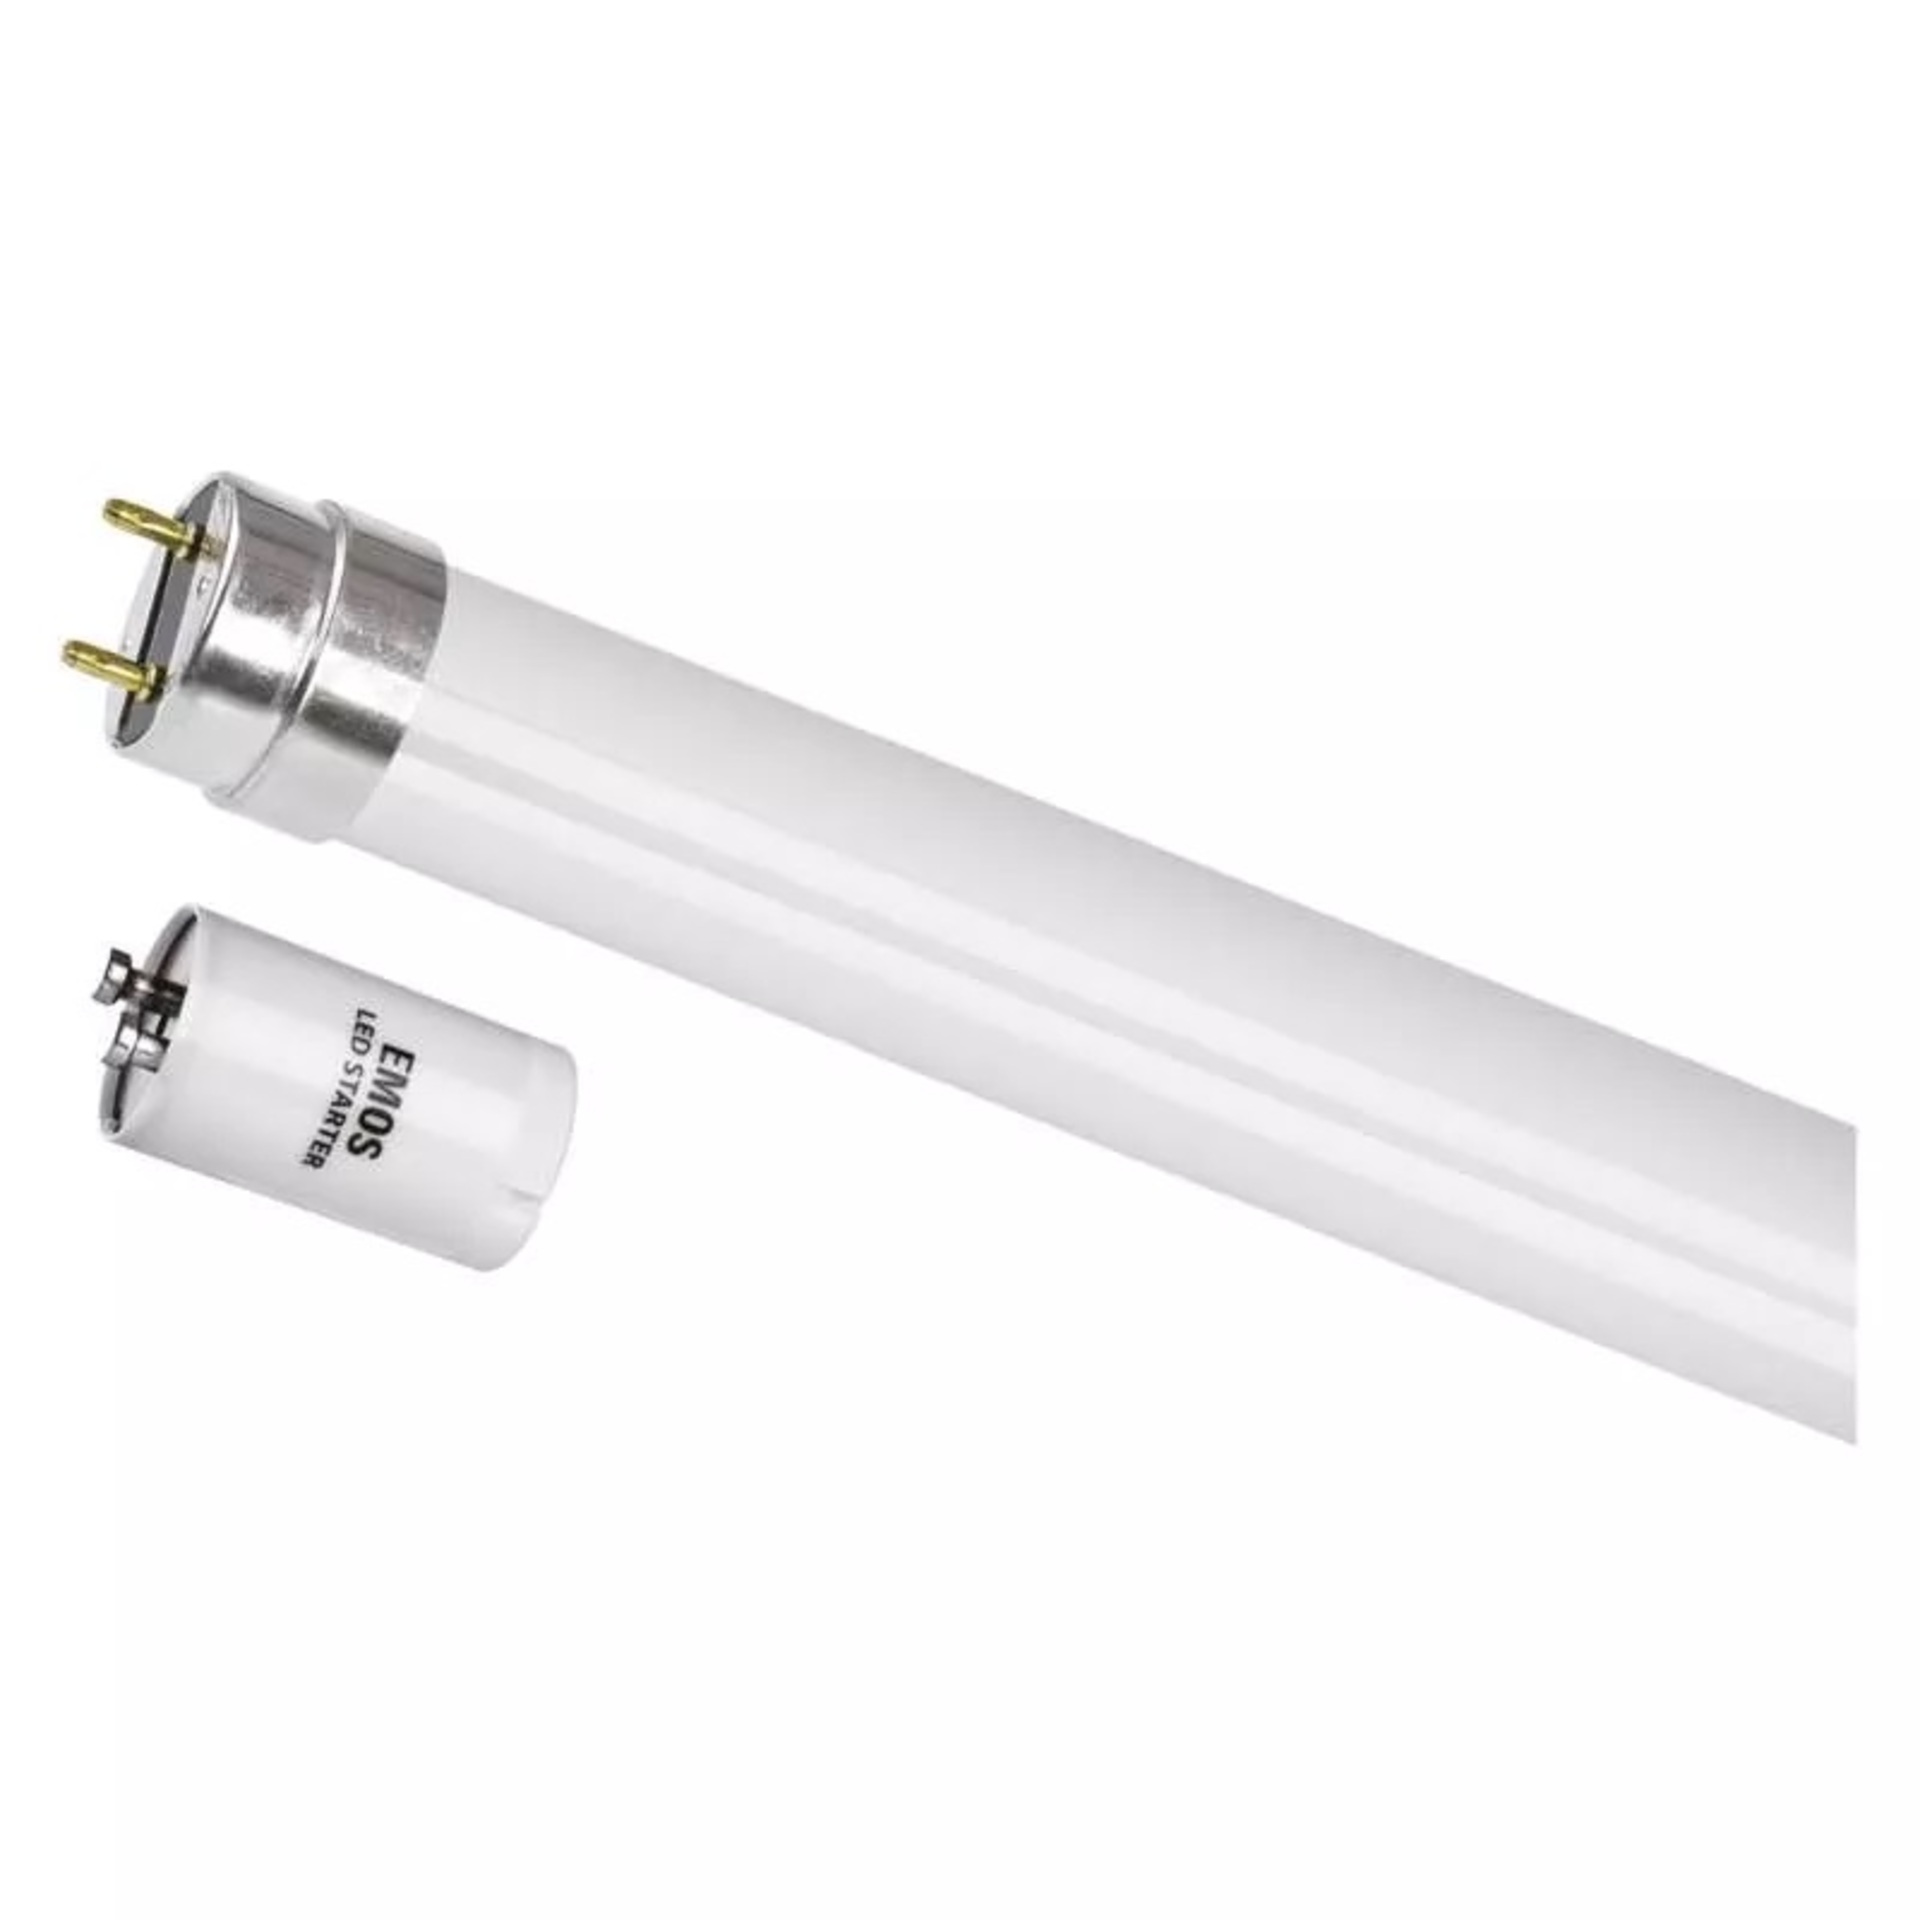 EMOS Lighting EMOS LED zářivka PROFI PLUS T8 14W 120cm studená bílá 1535238000